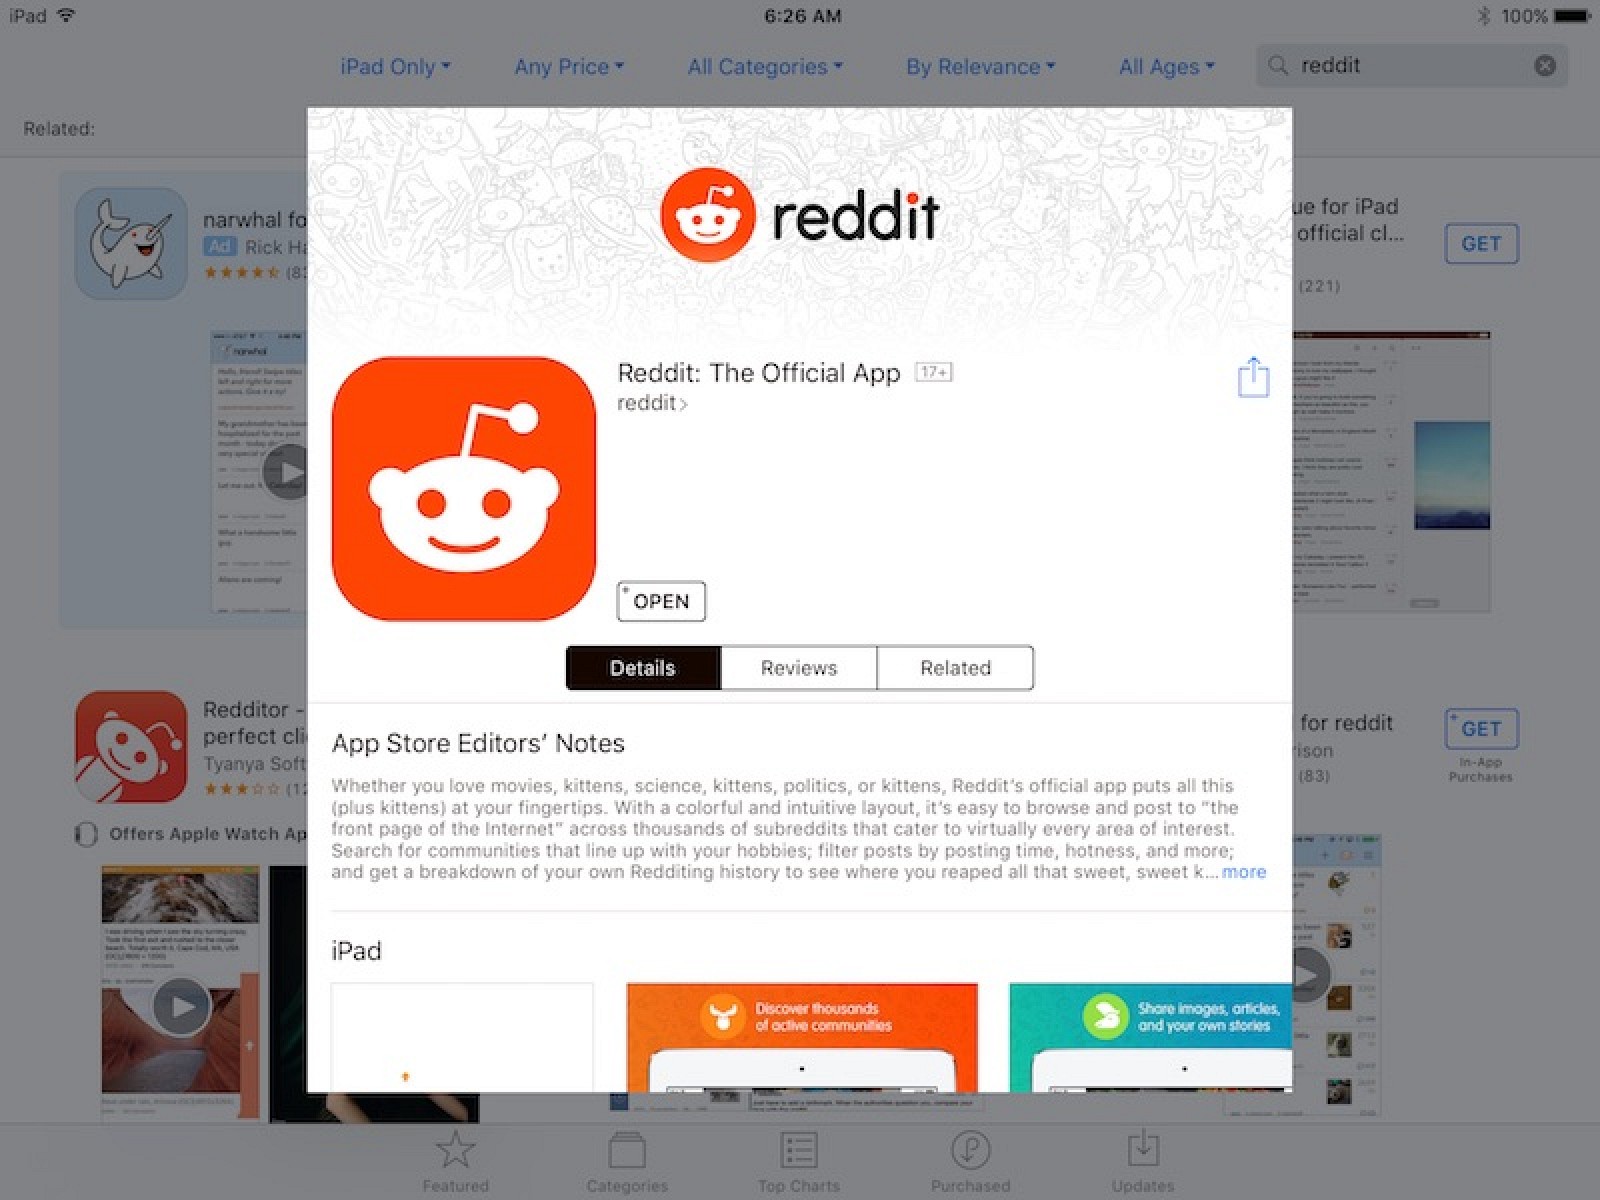 Reddit iOS Update Brings Support for iPad - MacRumors